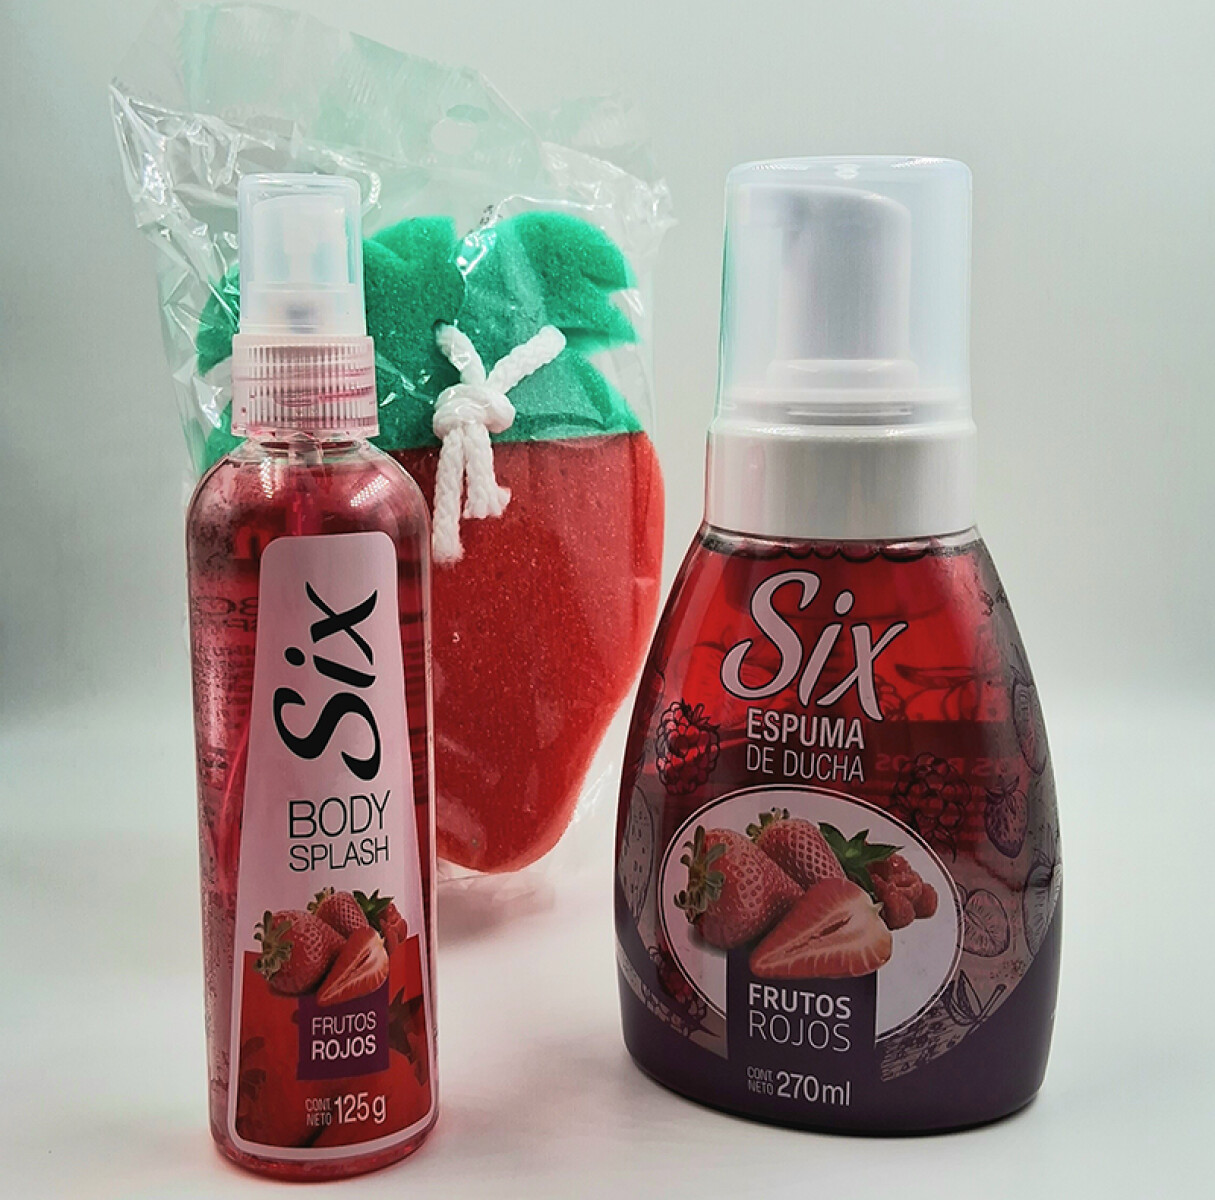 Pack navideño Six ducha - Espuma de ducha + Body splash + Esponja 